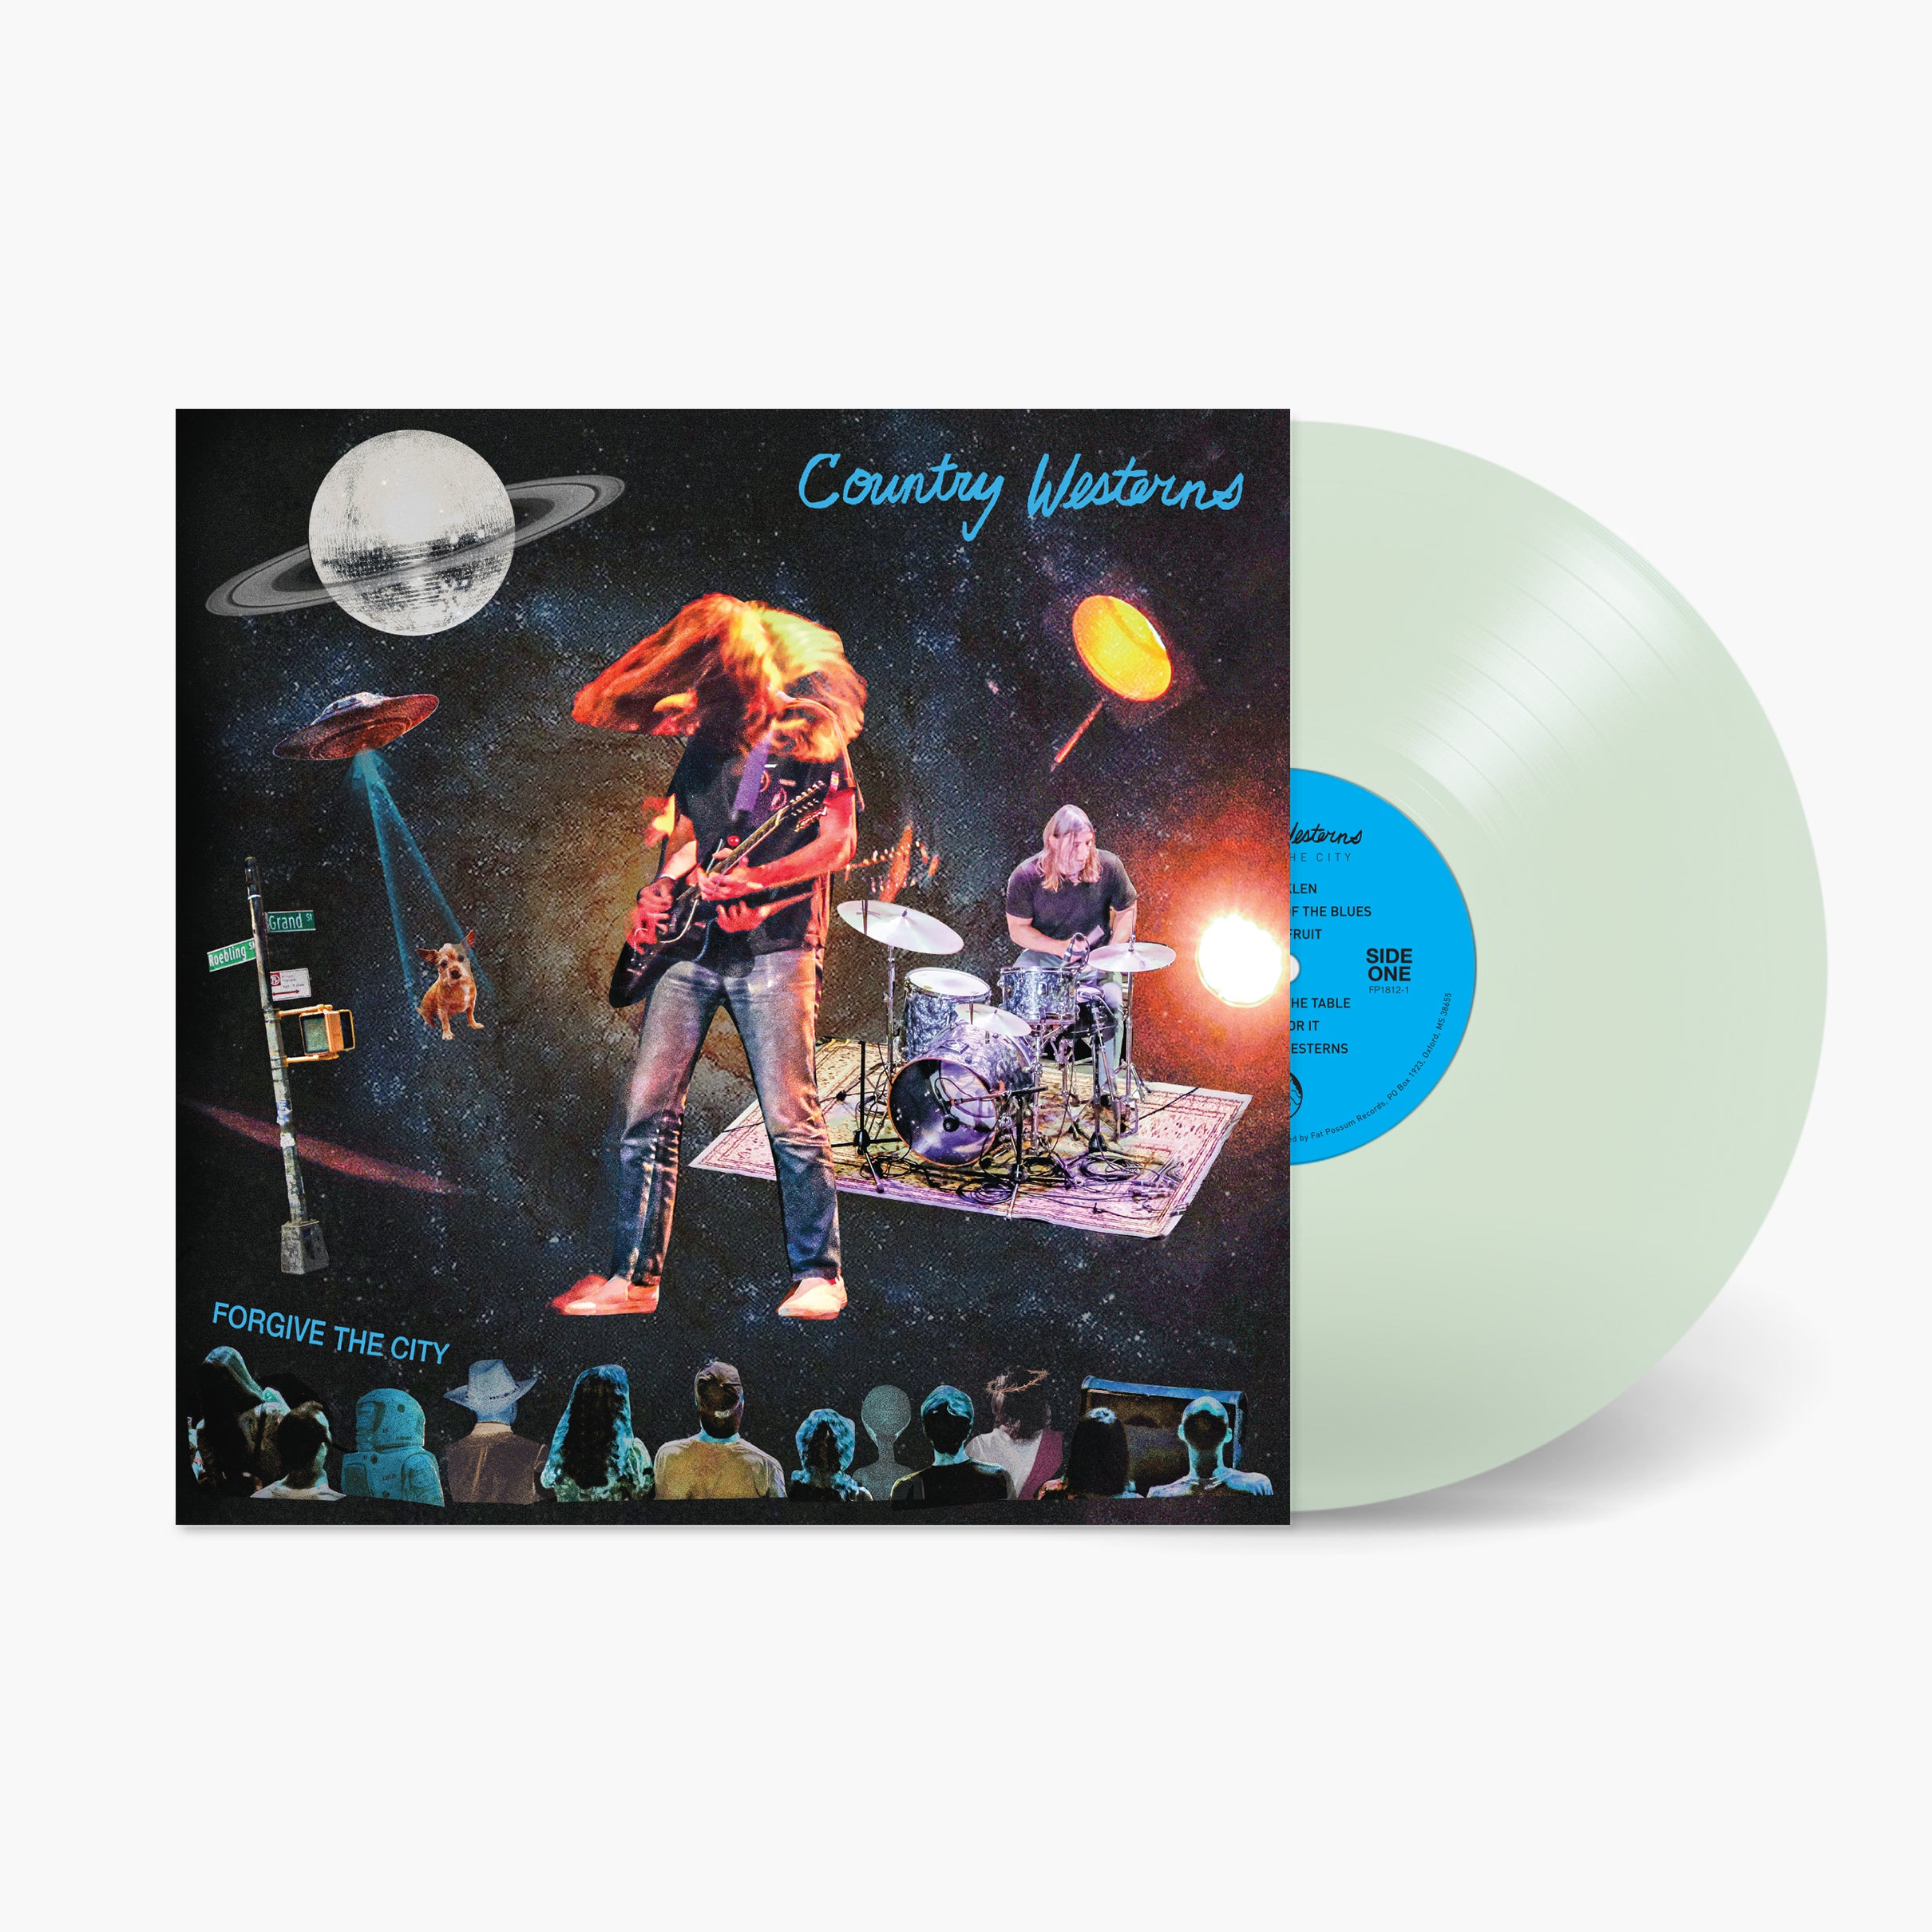 Robert Johnson LP - Cross Road Blues (Transparent Vinyl)